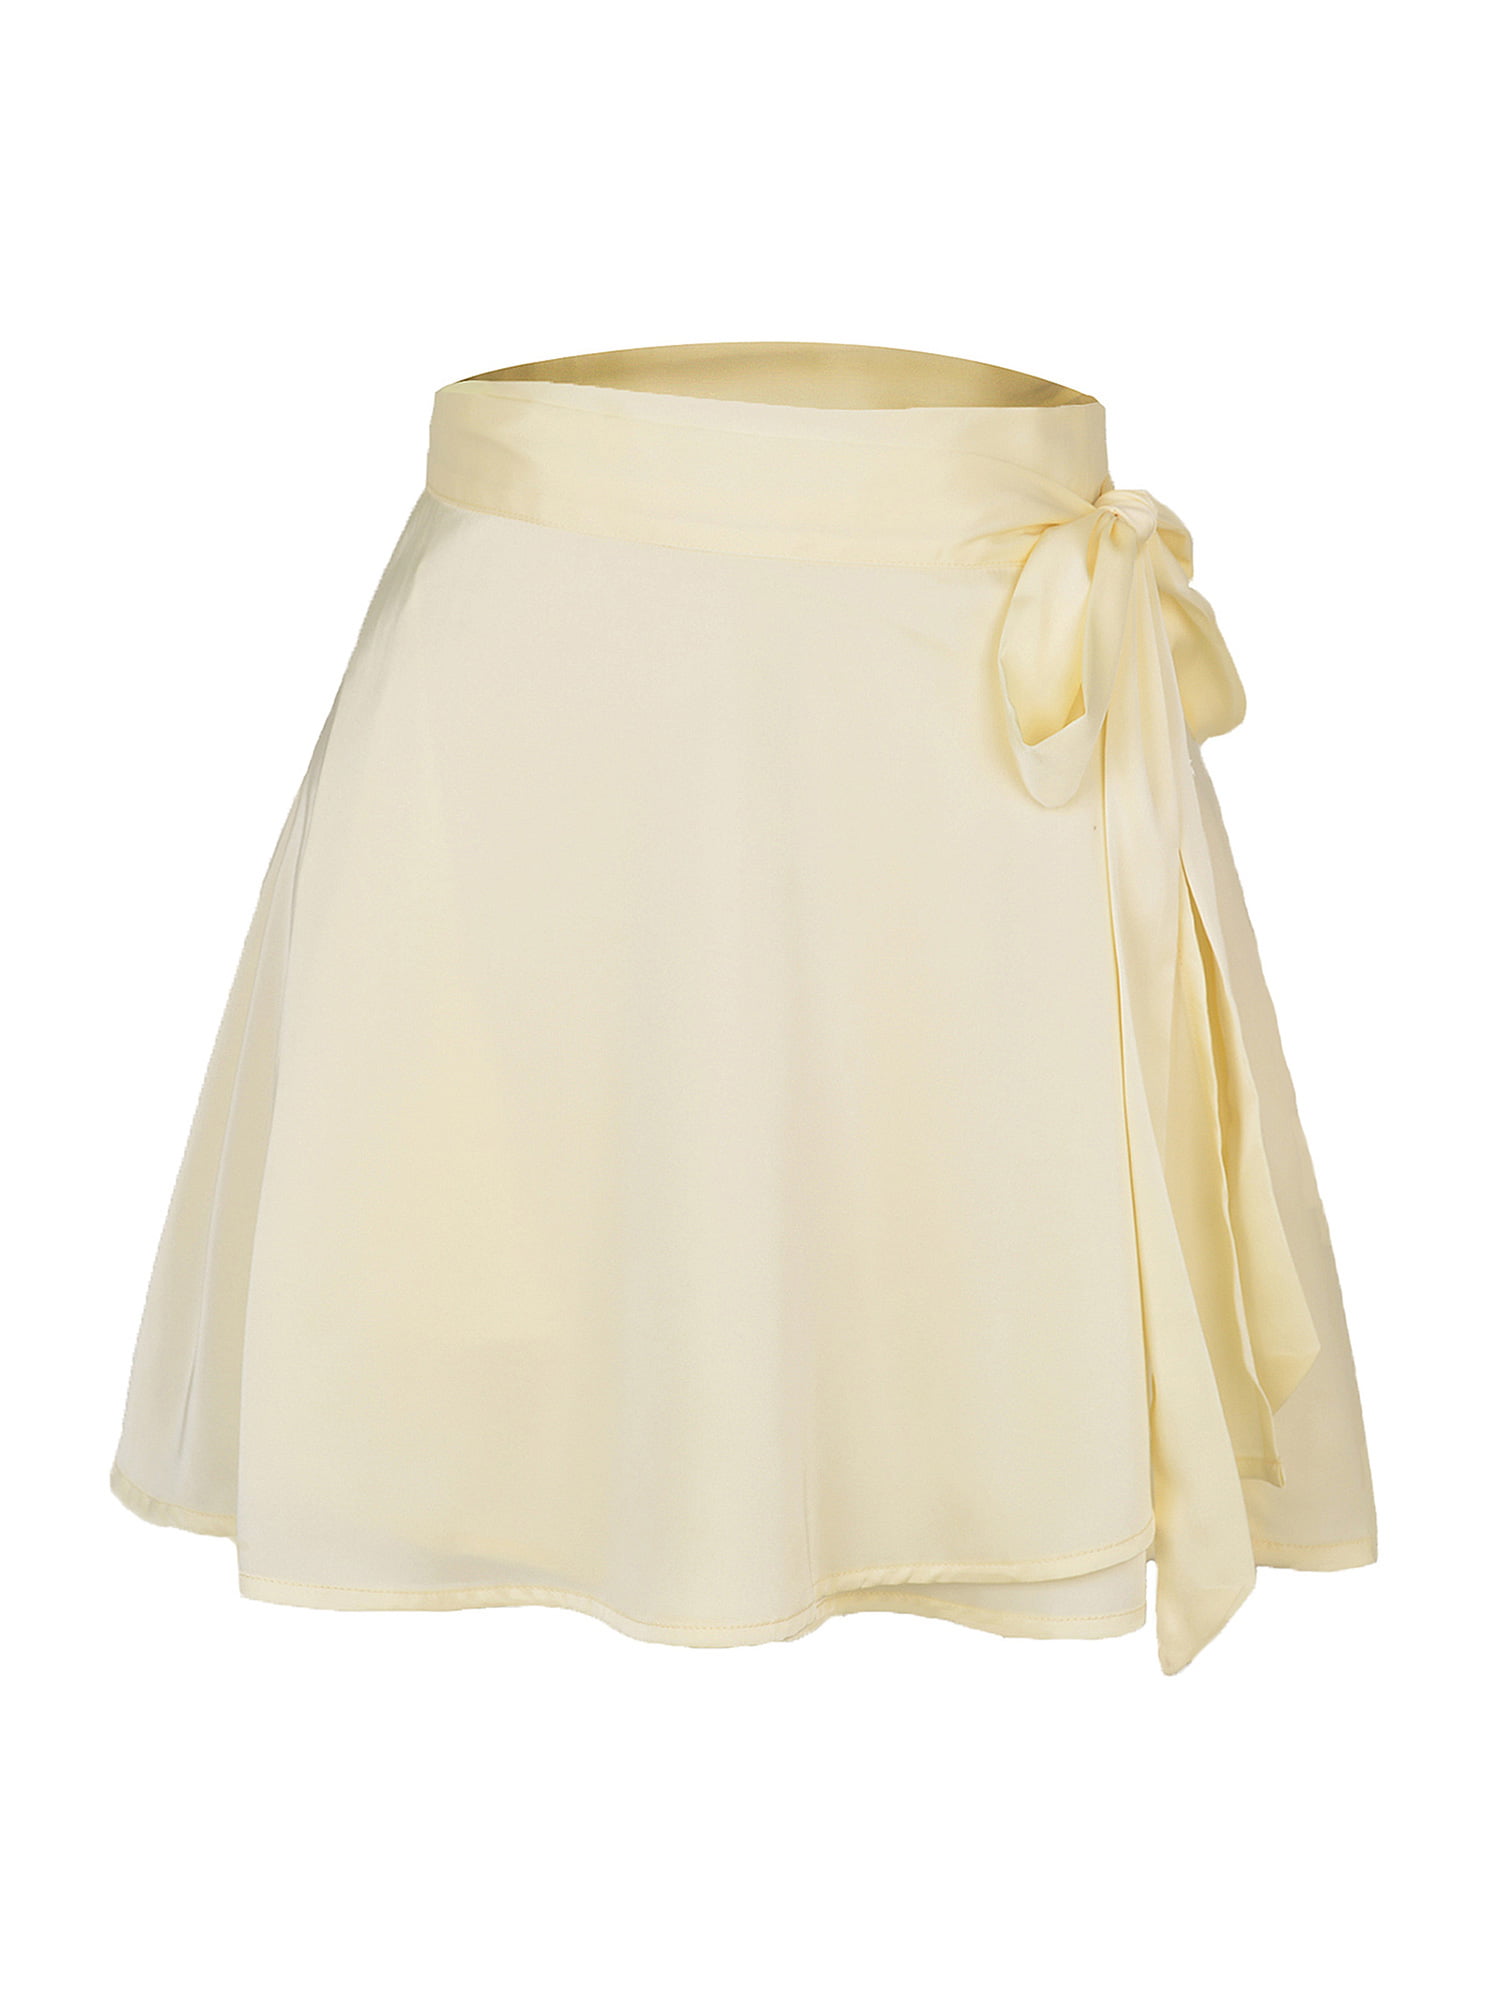 Gold mini skirts size 43 Listenwind Women High Waist Short Skirt Solid Color Large Hem Mini Skirt Walmart Com Walmart Com